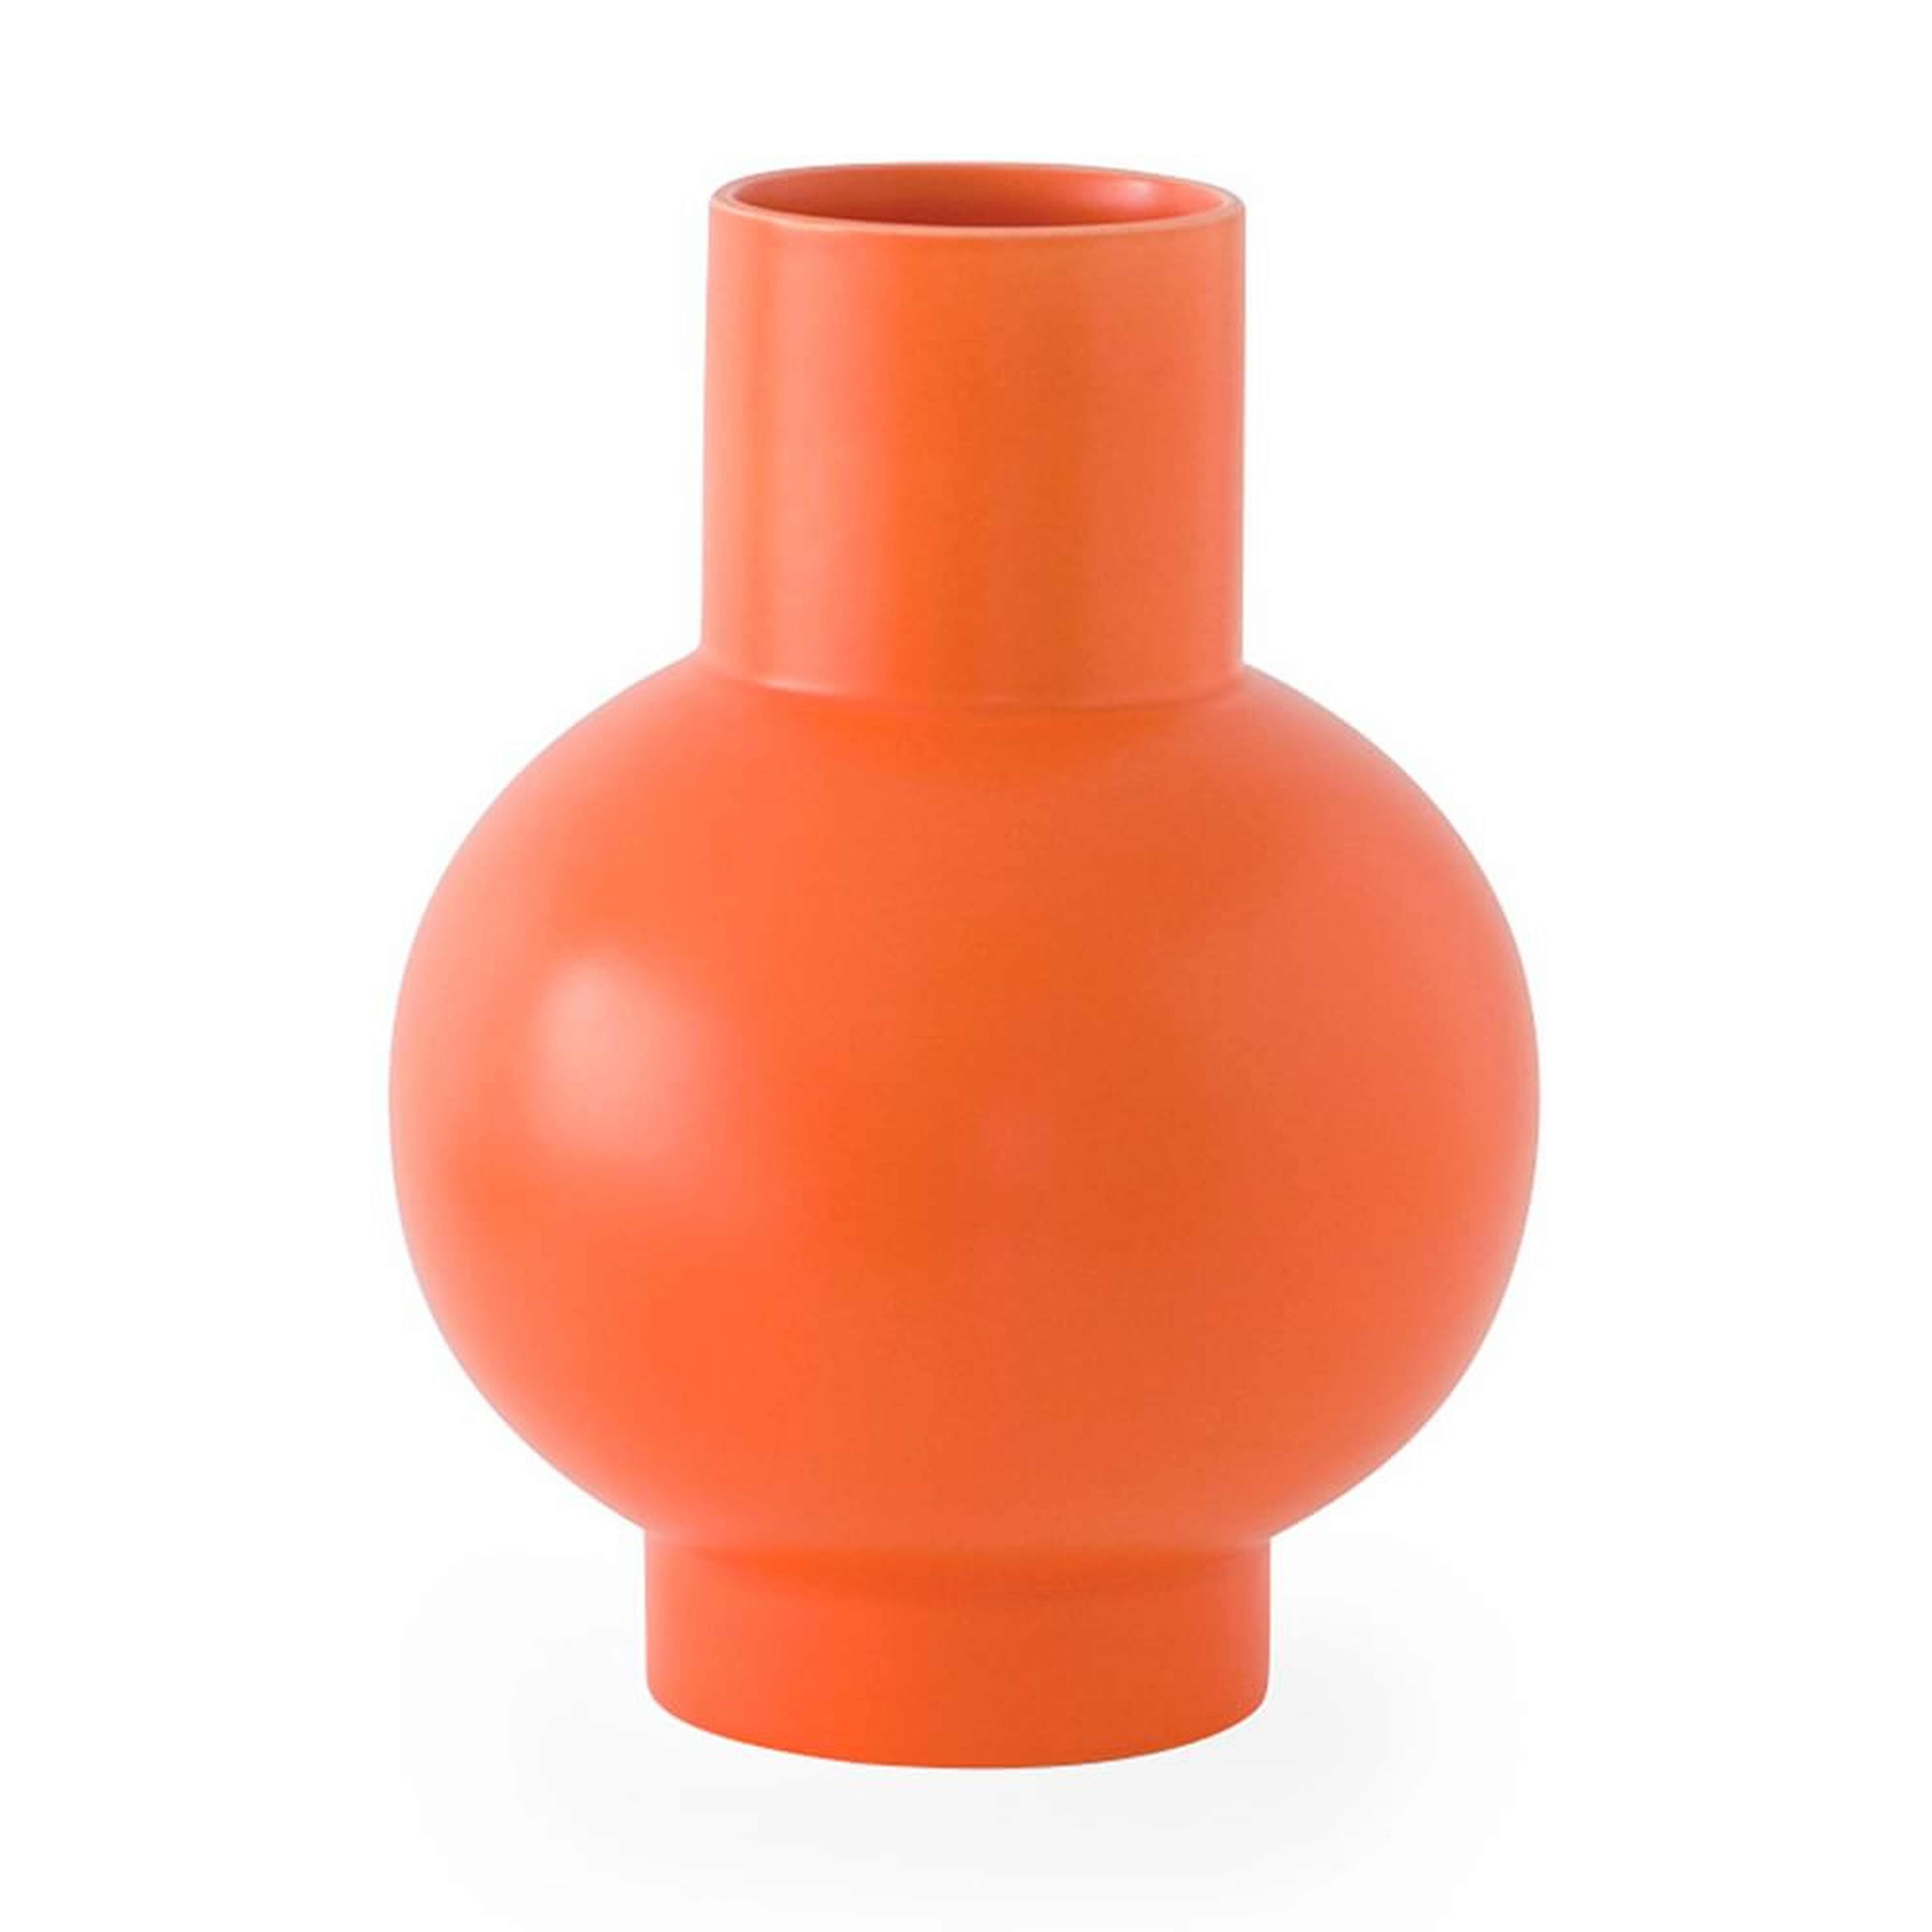 MoMA Collection Raawii Strom Vase Small, Ceramic, Vibrant Orange - West Elm